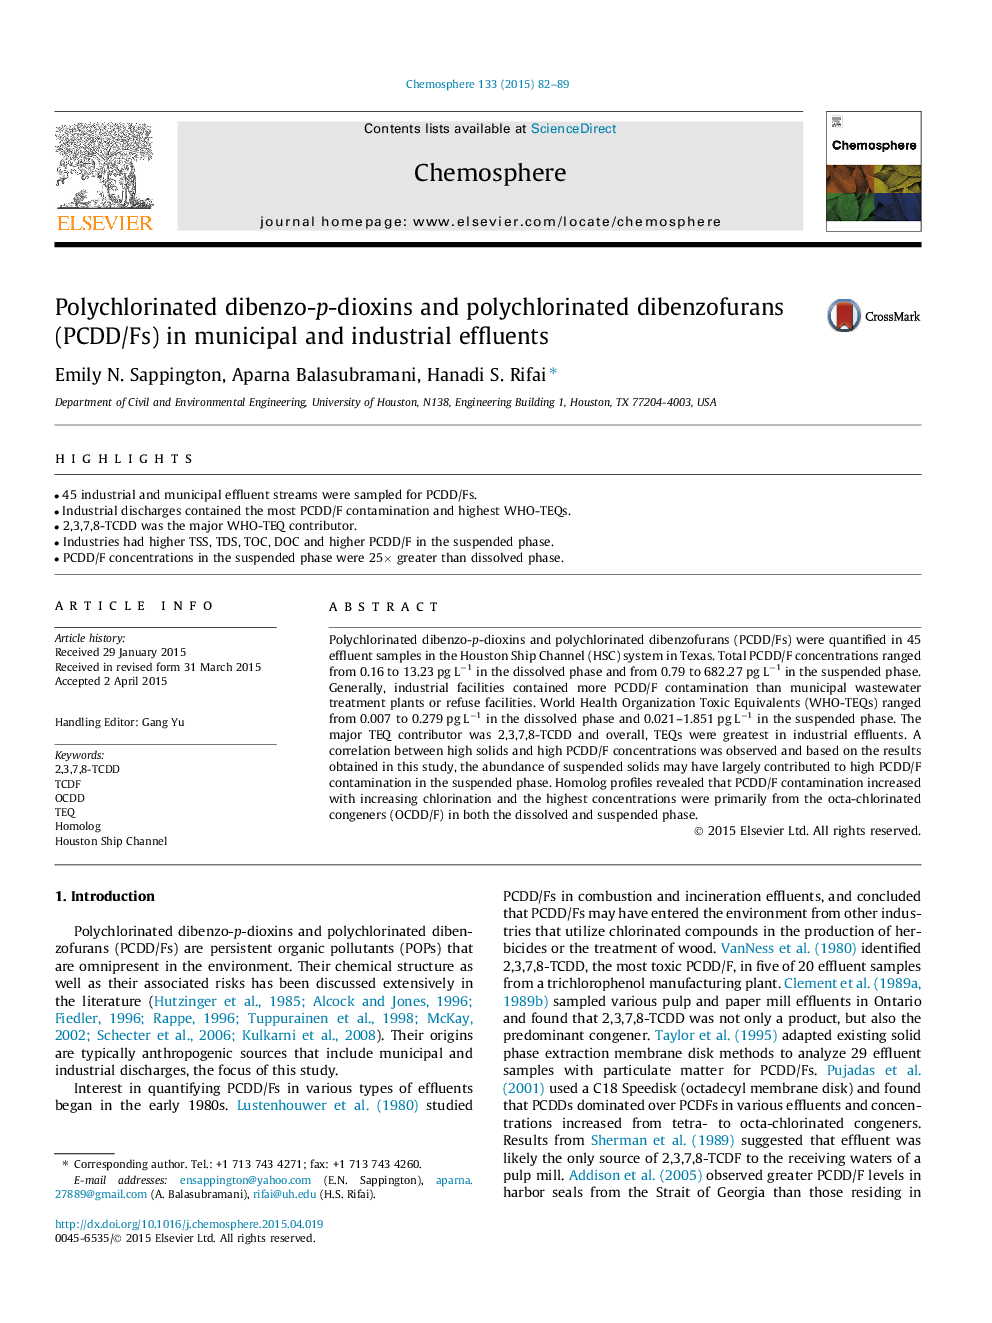 Polychlorinated dibenzo-p-dioxins and polychlorinated dibenzofurans (PCDD/Fs) in municipal and industrial effluents